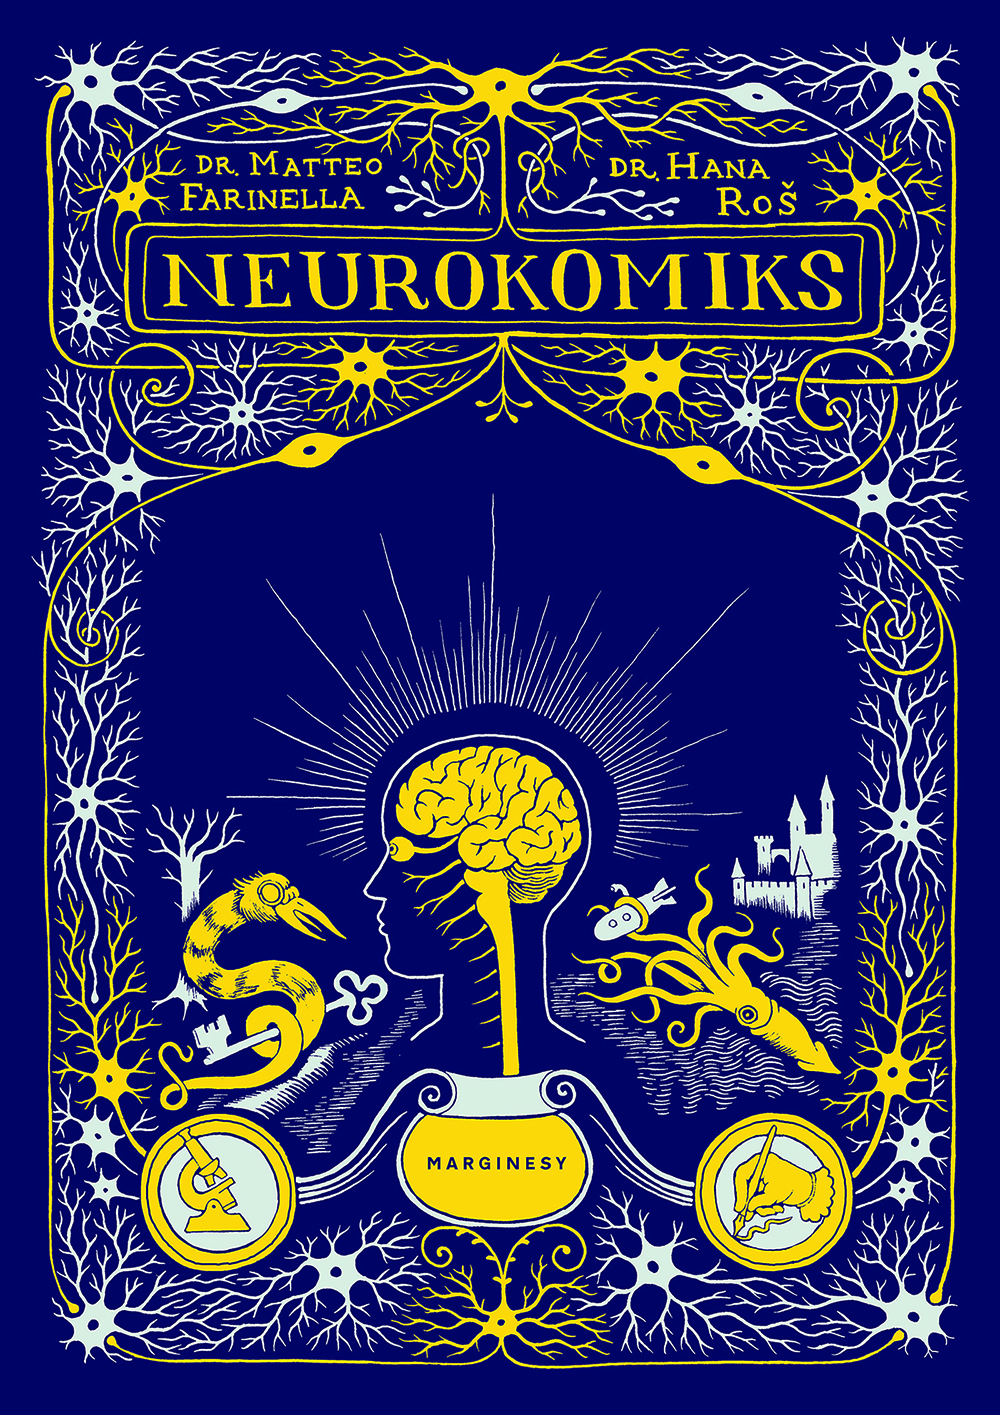 Okładka książki "Neurokomiks"